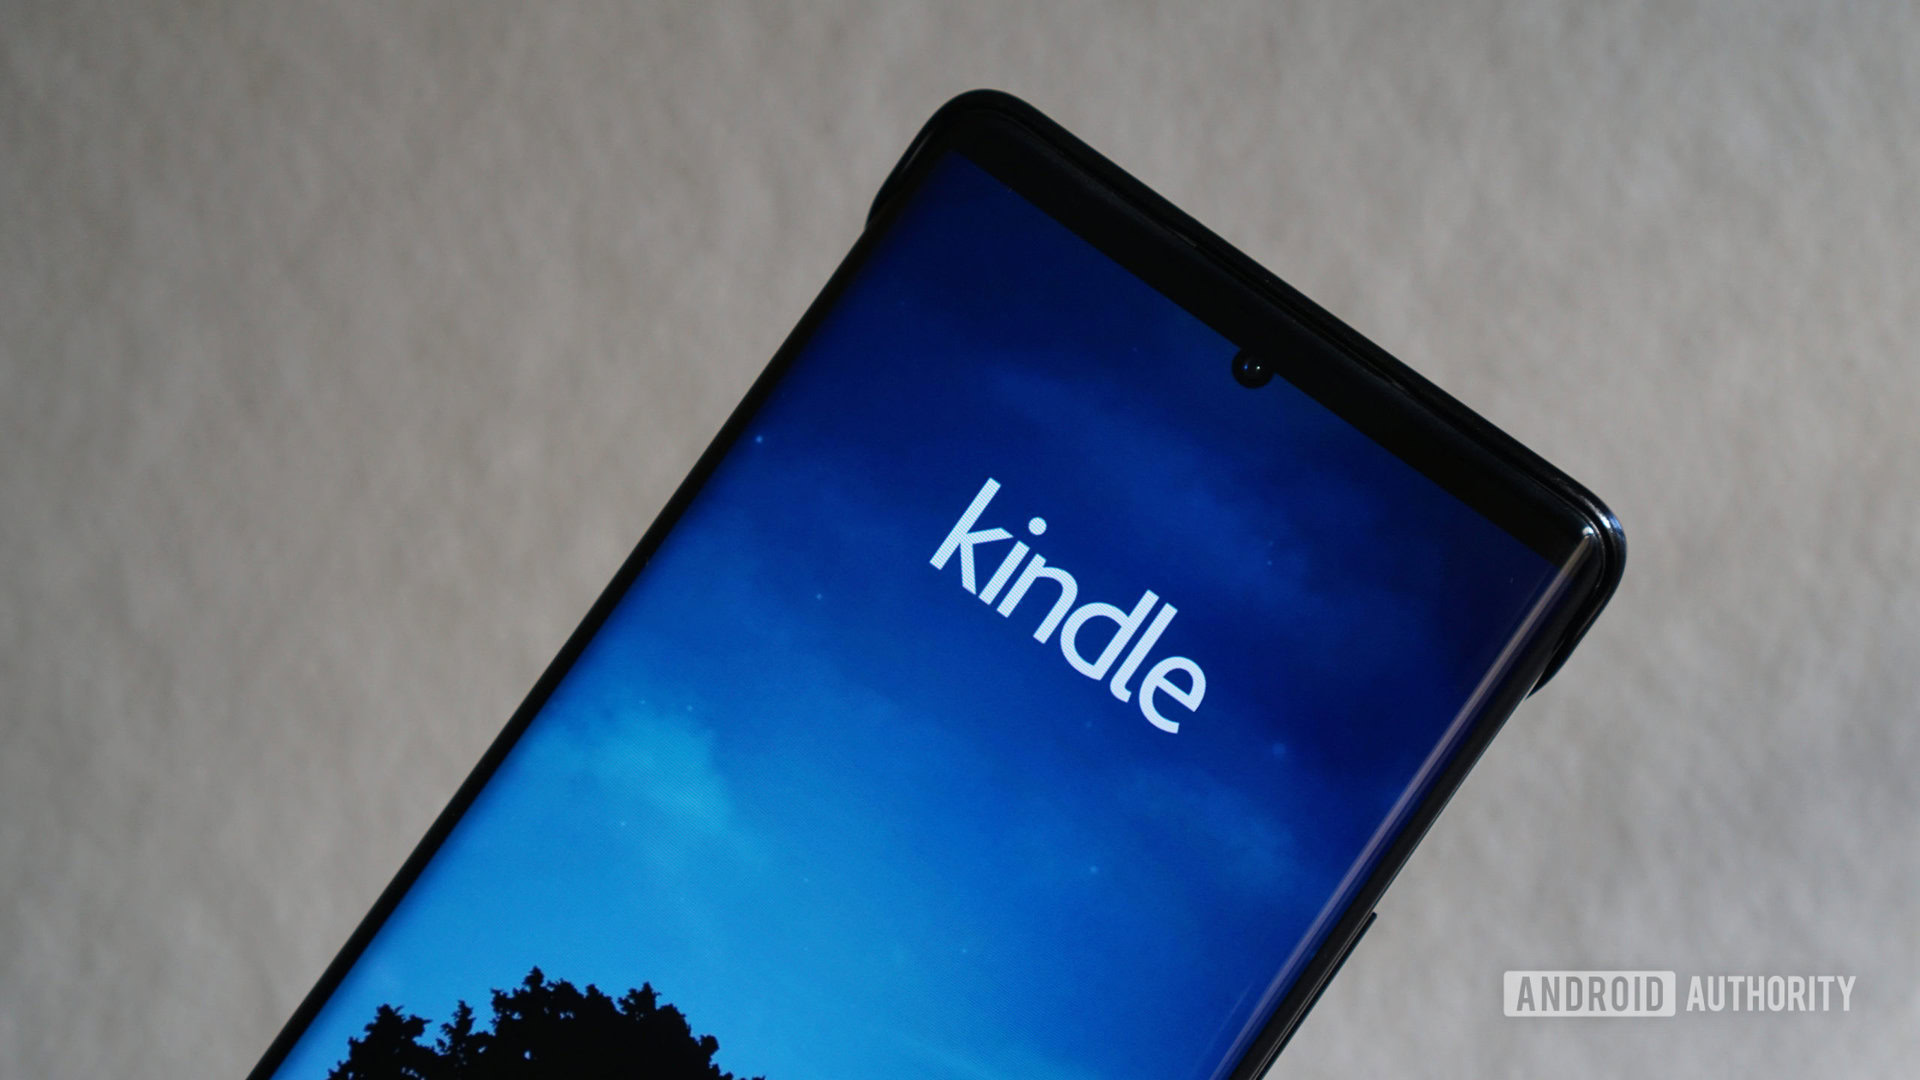 Amazon Kindle app on Android 4 edited